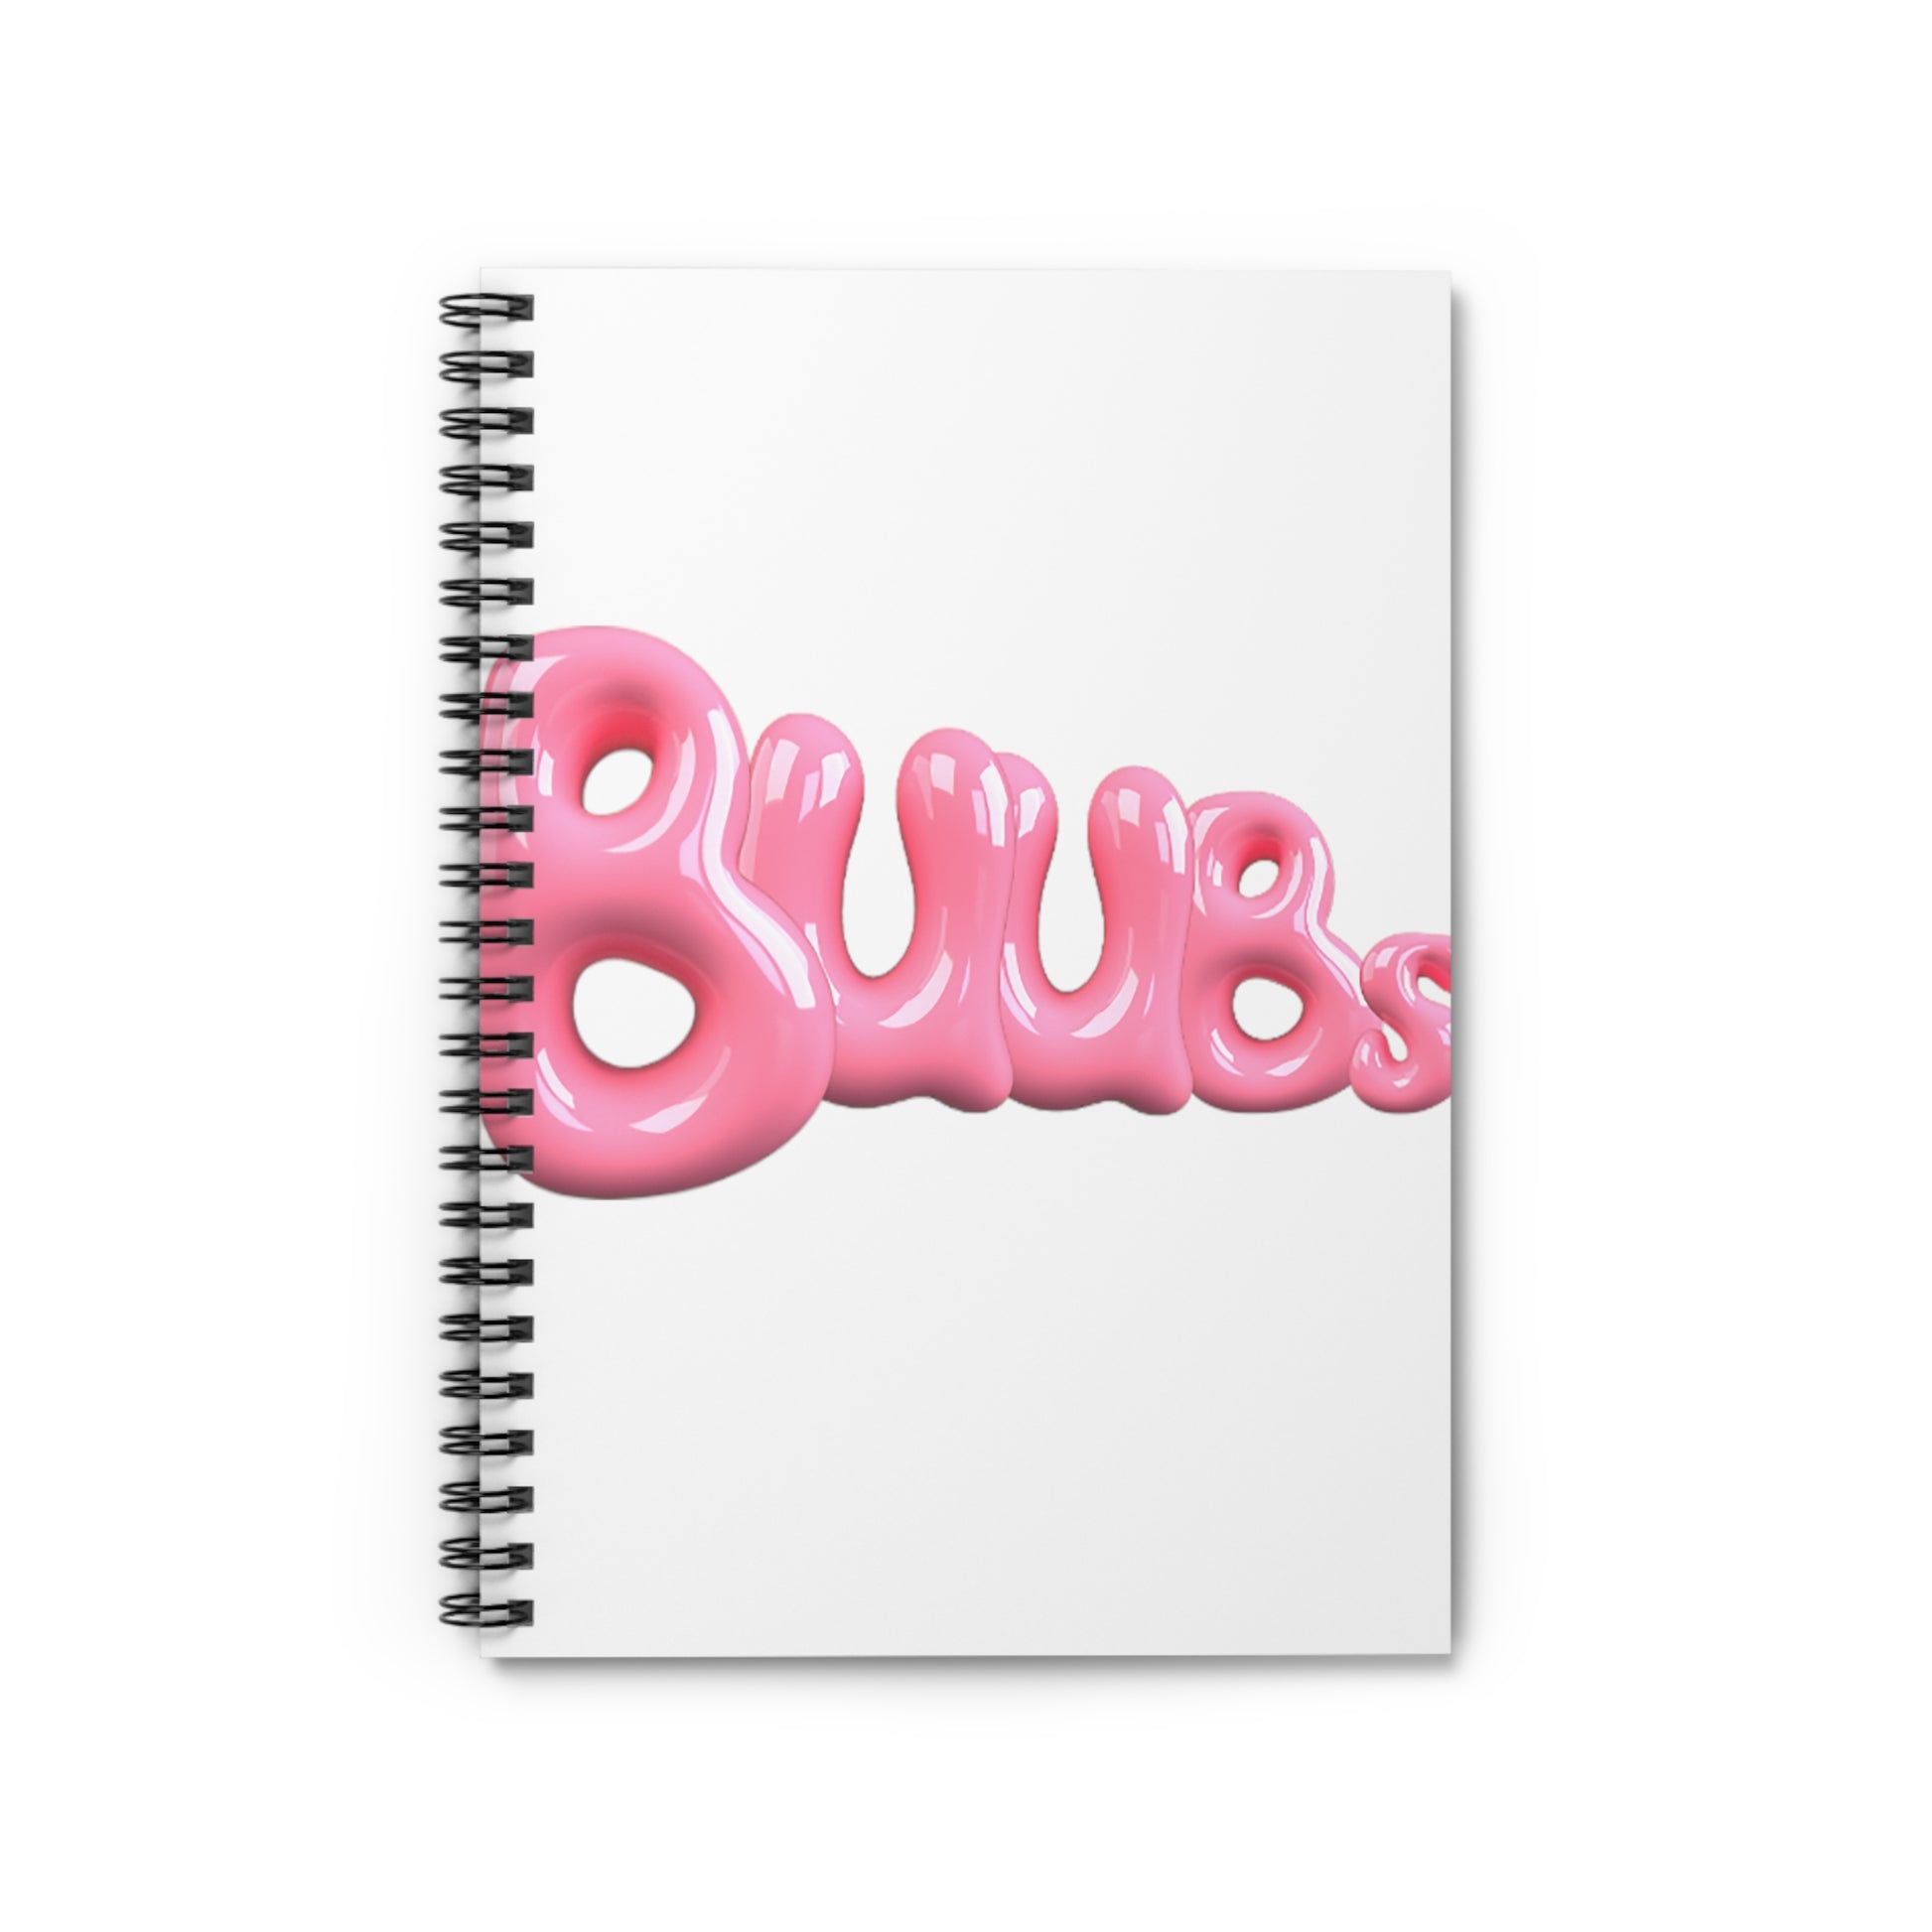 Juucie | "Buubs" Spiral Notebook - Ruled Line - Juucie